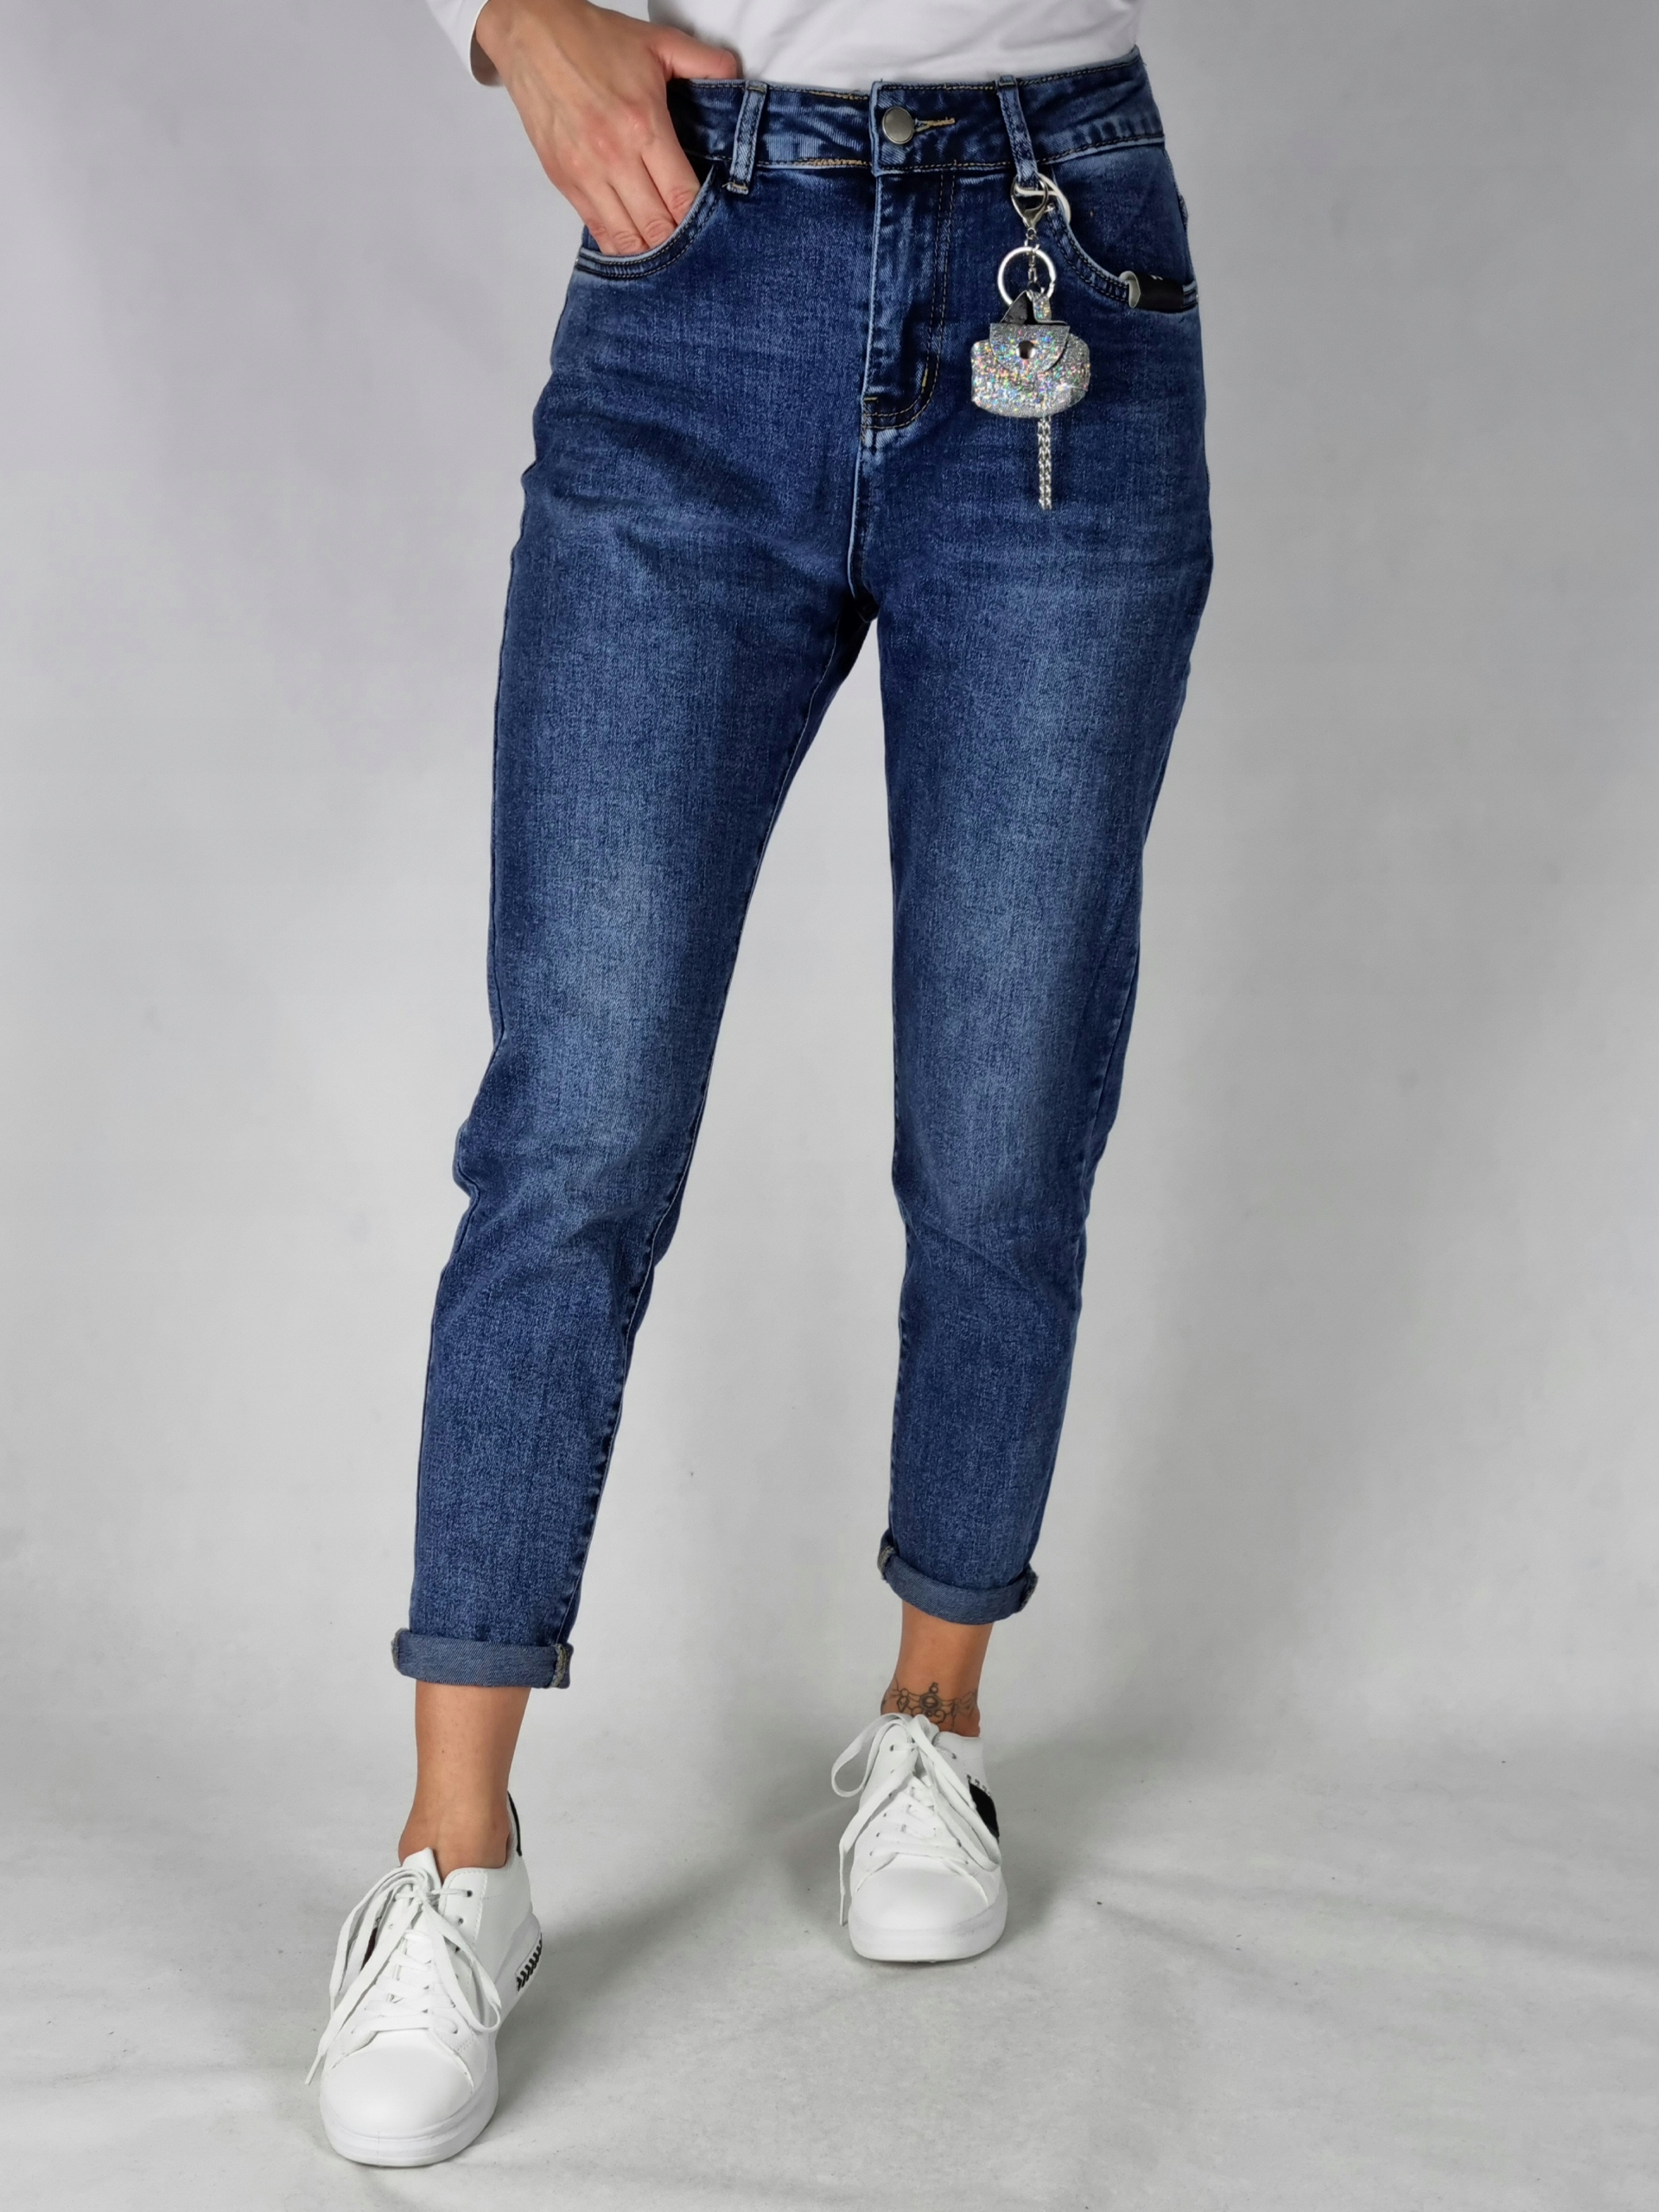 M. SARA BOYFRIEND джинсовые брюки размер M Midsection (Waist Height) high